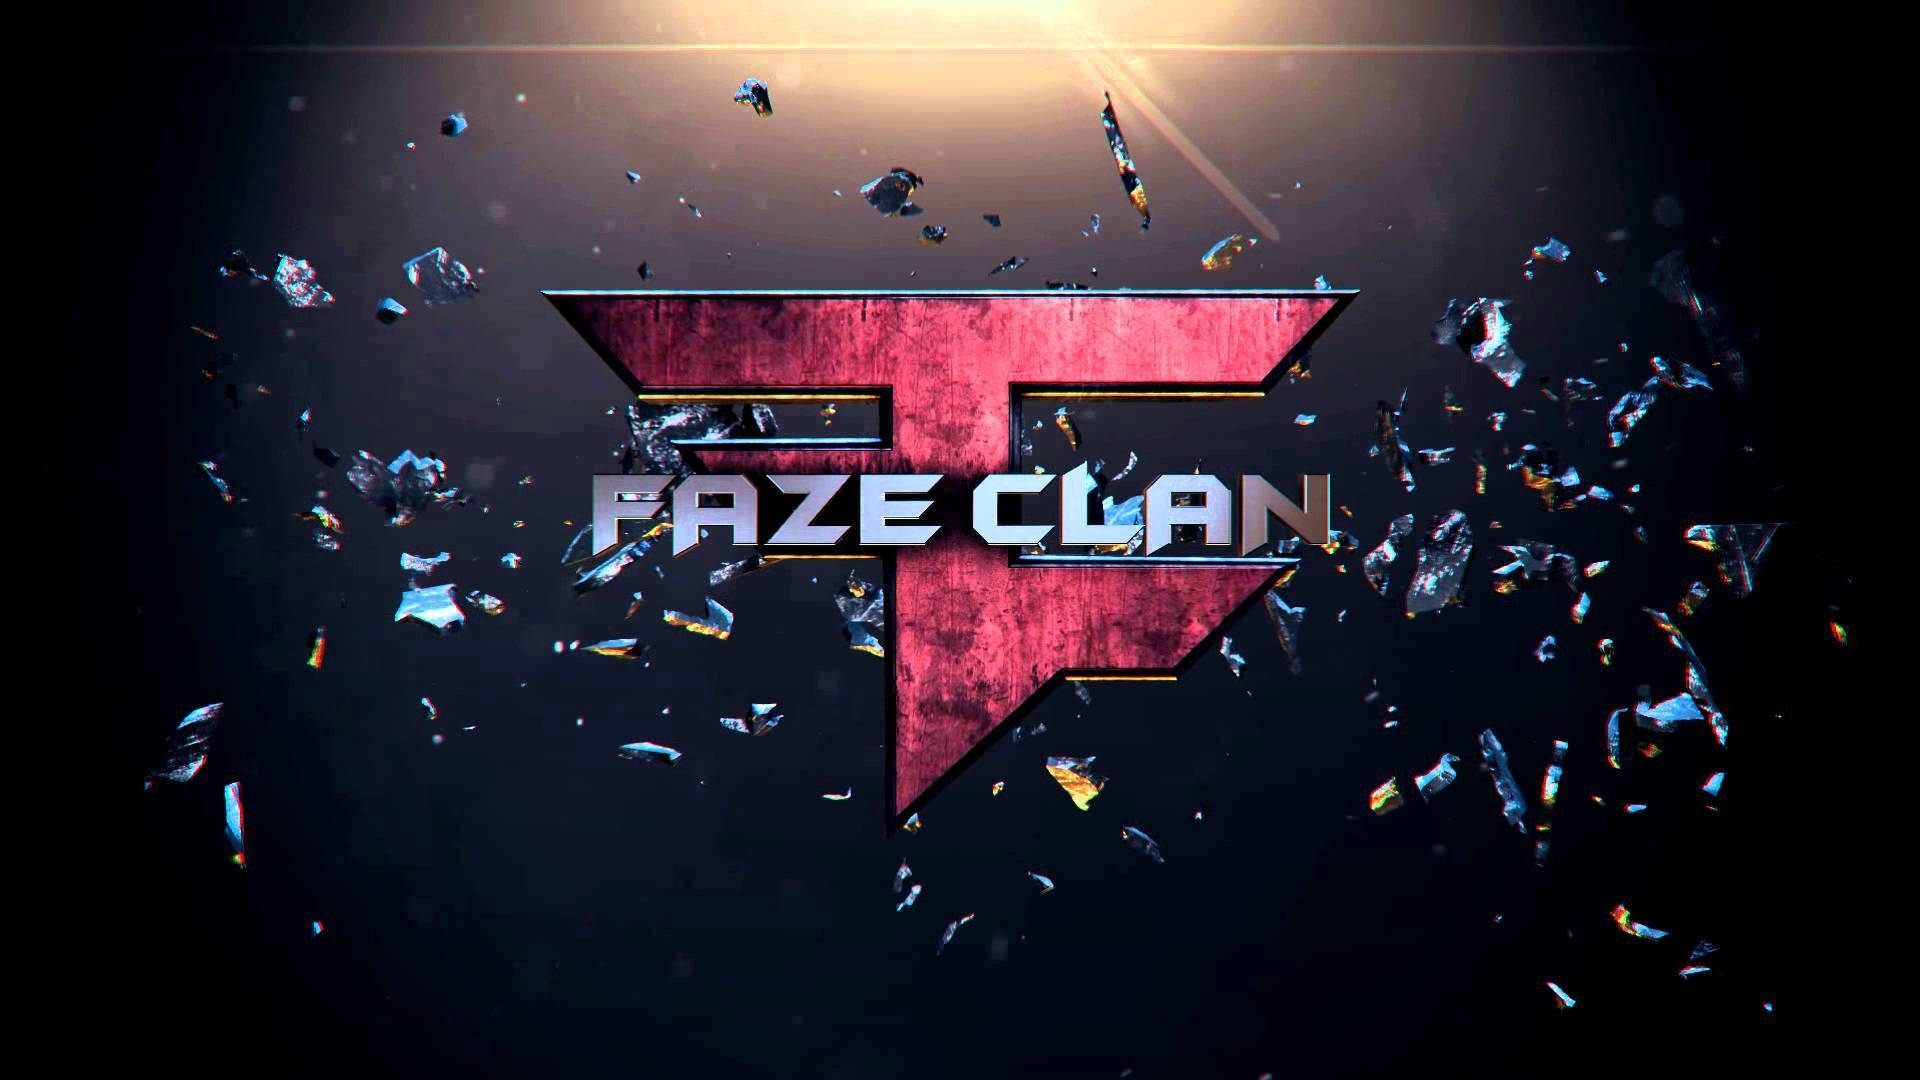 Aesthetic Youtube Red Faze Clan Logo Background